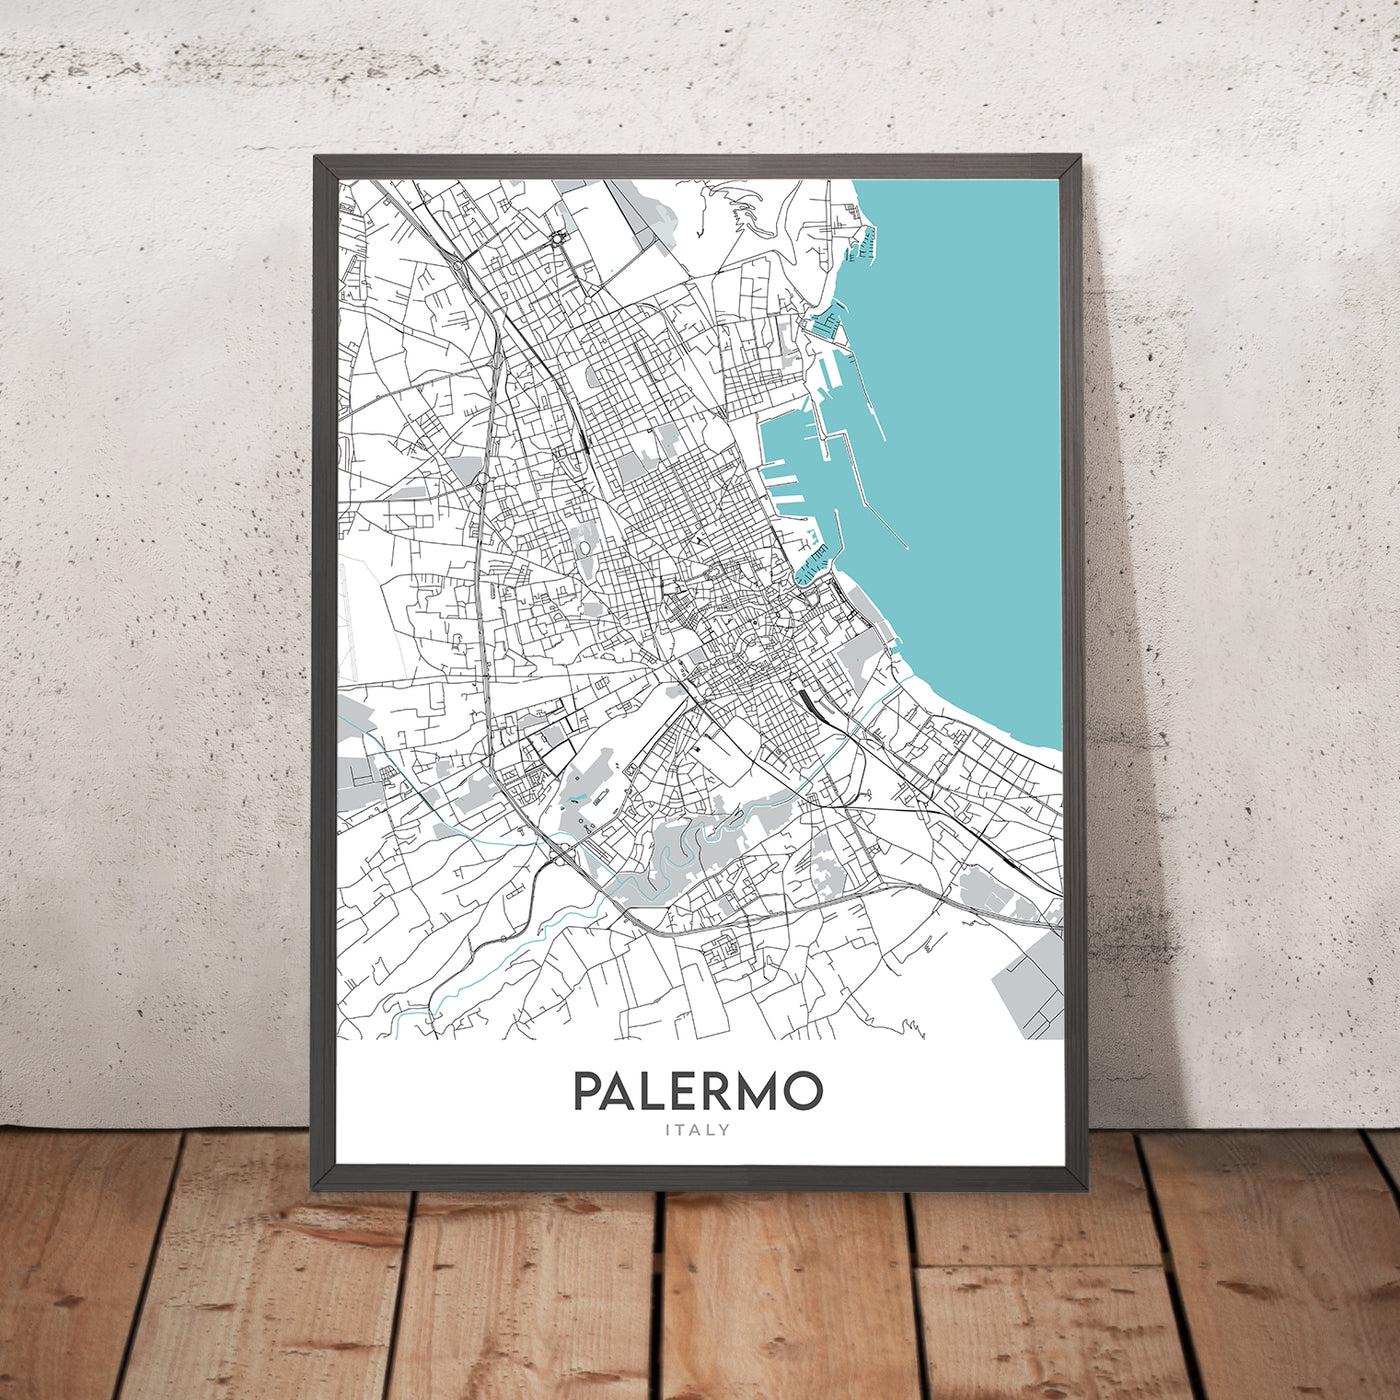 Mapa moderno de la ciudad de Palermo, Italia: Albergheria, Kalsa, Teatro Massimo, Politeama, Quattro Canti